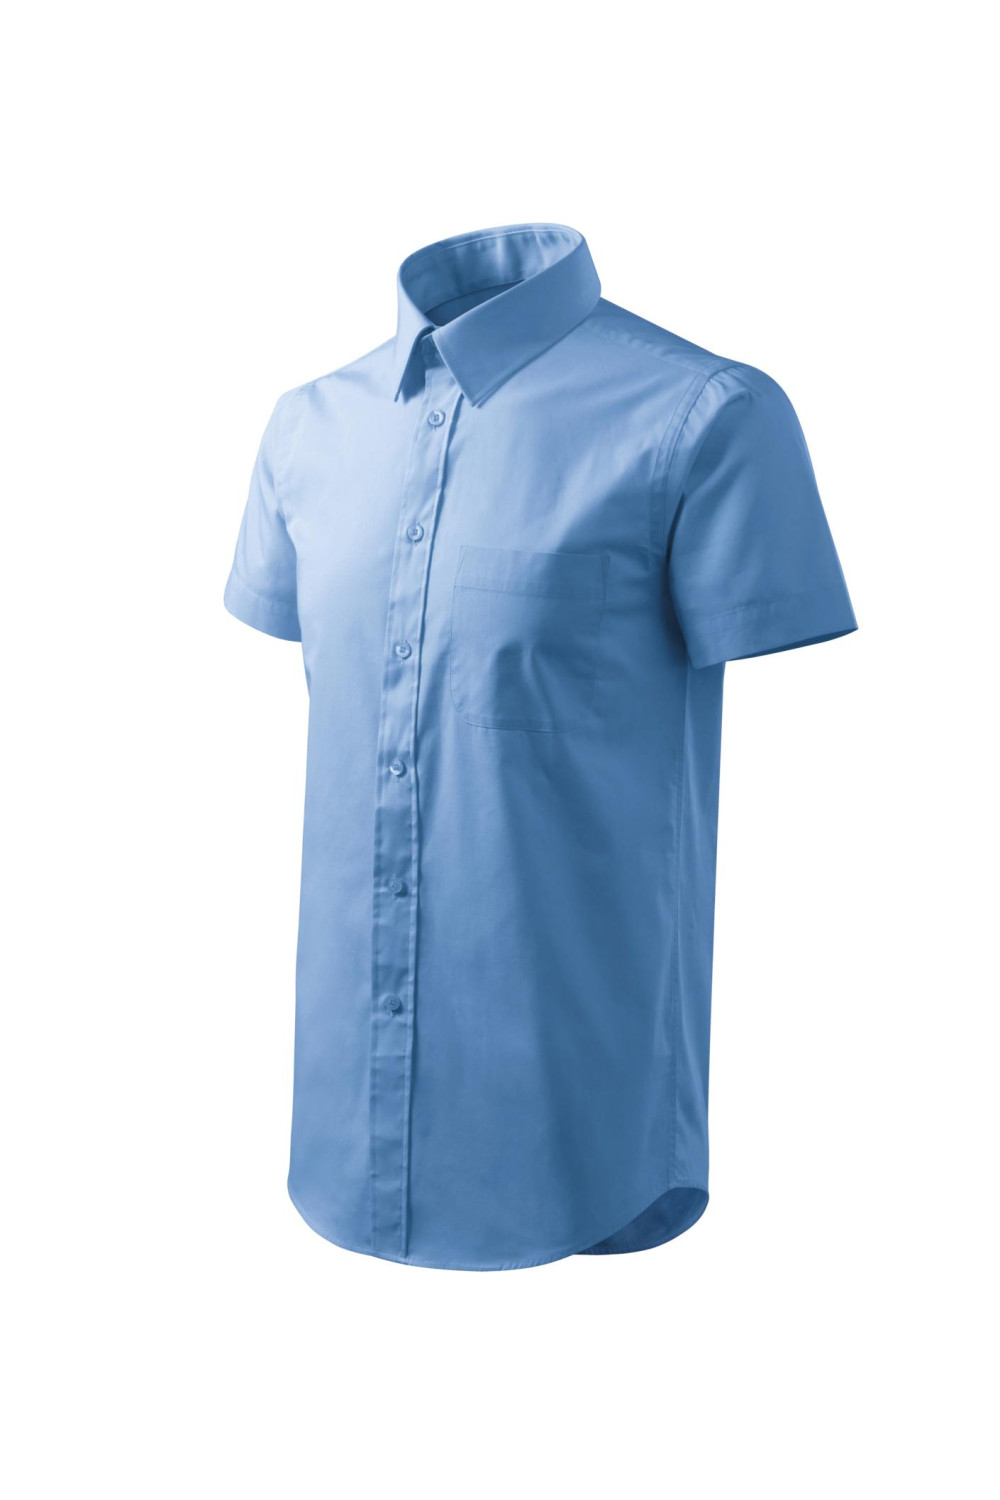 CHIC 207 MALFINI ADLER Koszula męska, krótki rękaw. 100% Bawełna błękit